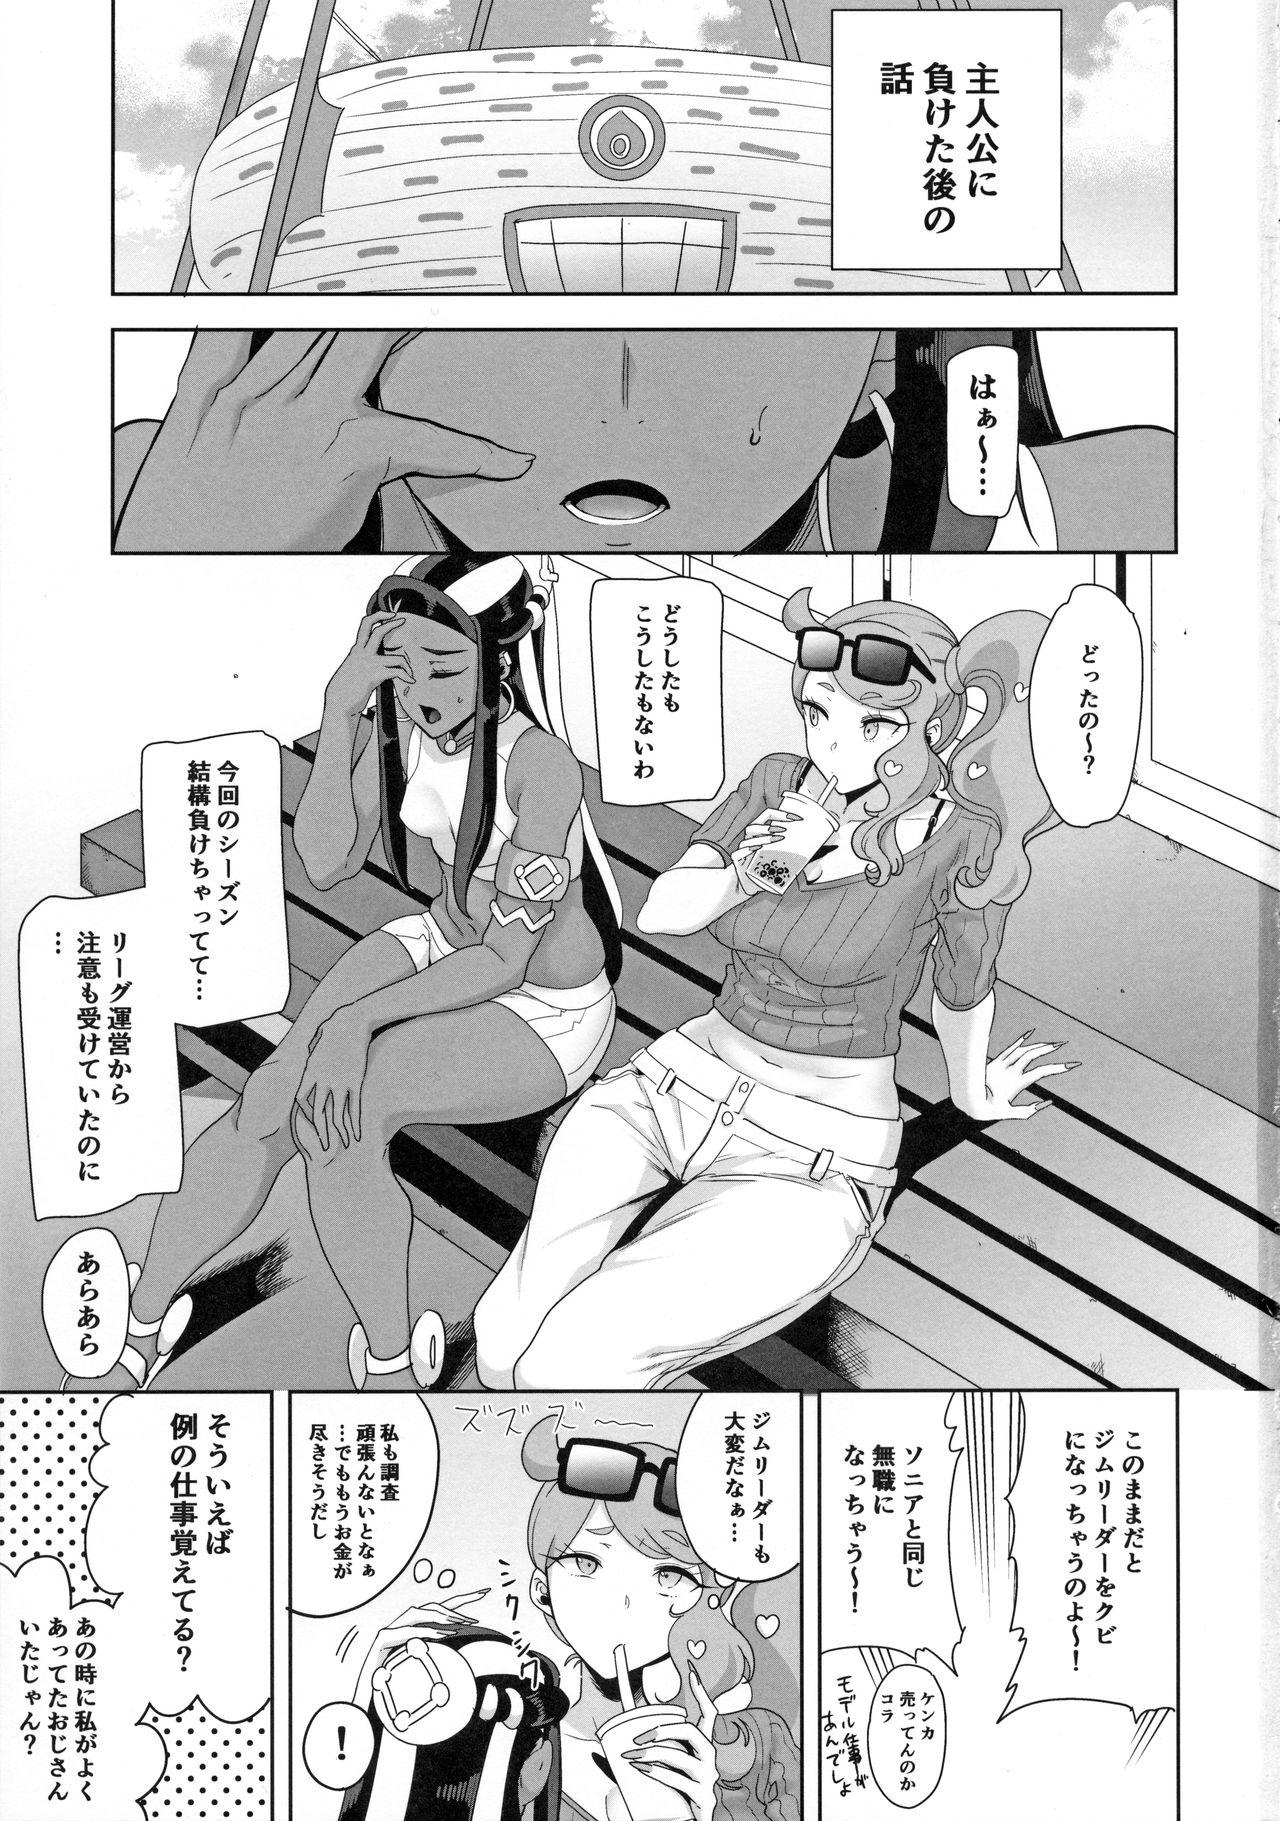 Amature Sex Tapes Galar no Yoru no Sugata - Pokemon | pocket monsters Cheerleader - Page 3